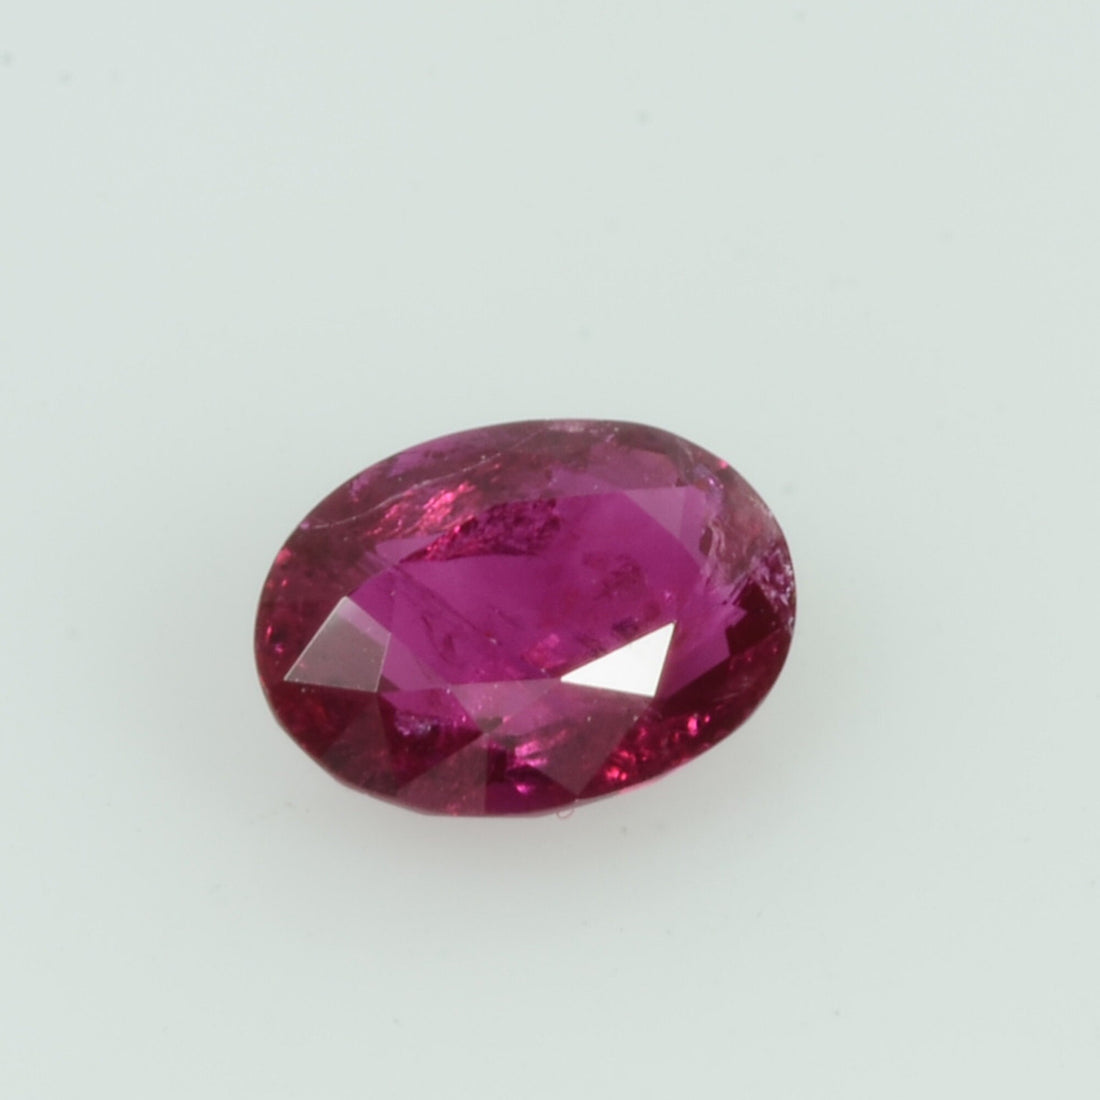 0.62 Cts Unheated Natural Burma Ruby Loose Gemstone Oval Cut